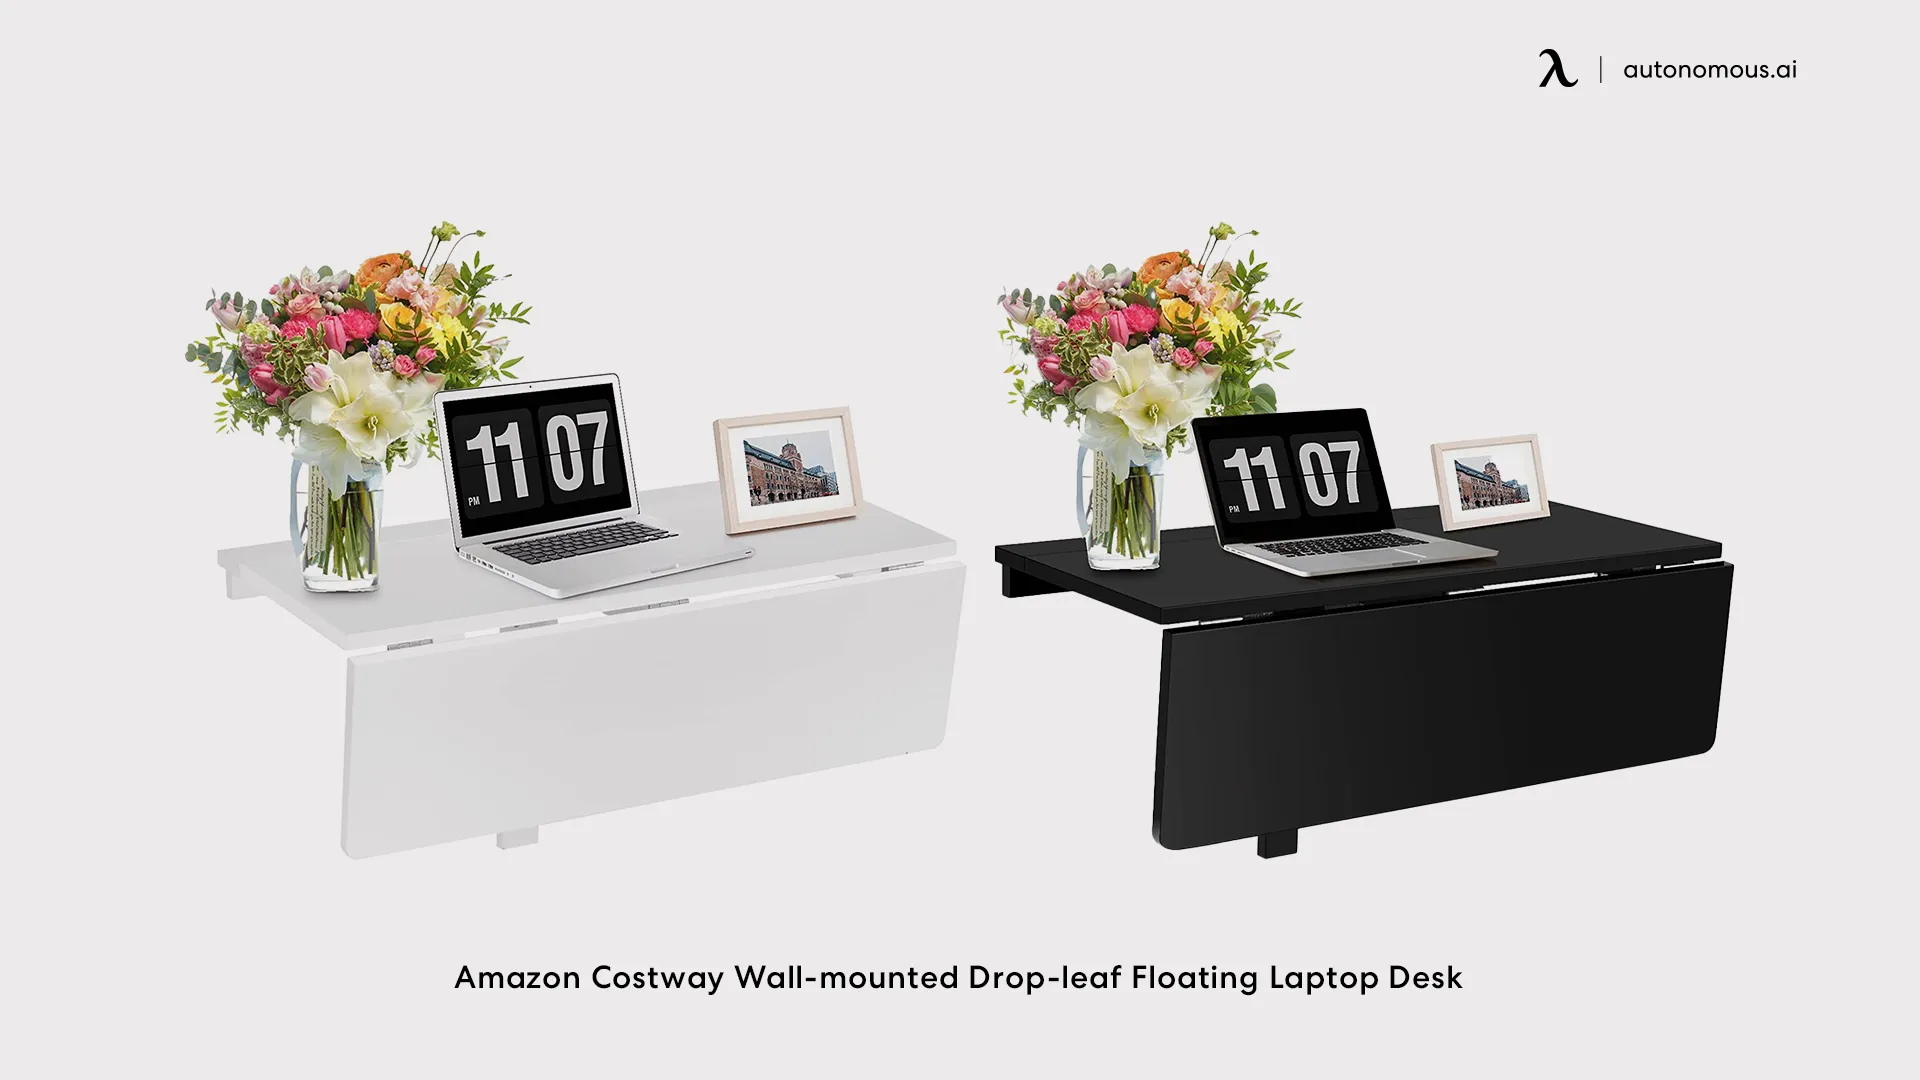 Amazon Costway Wall-mounted Drop-leaf Floating Laptop Desk